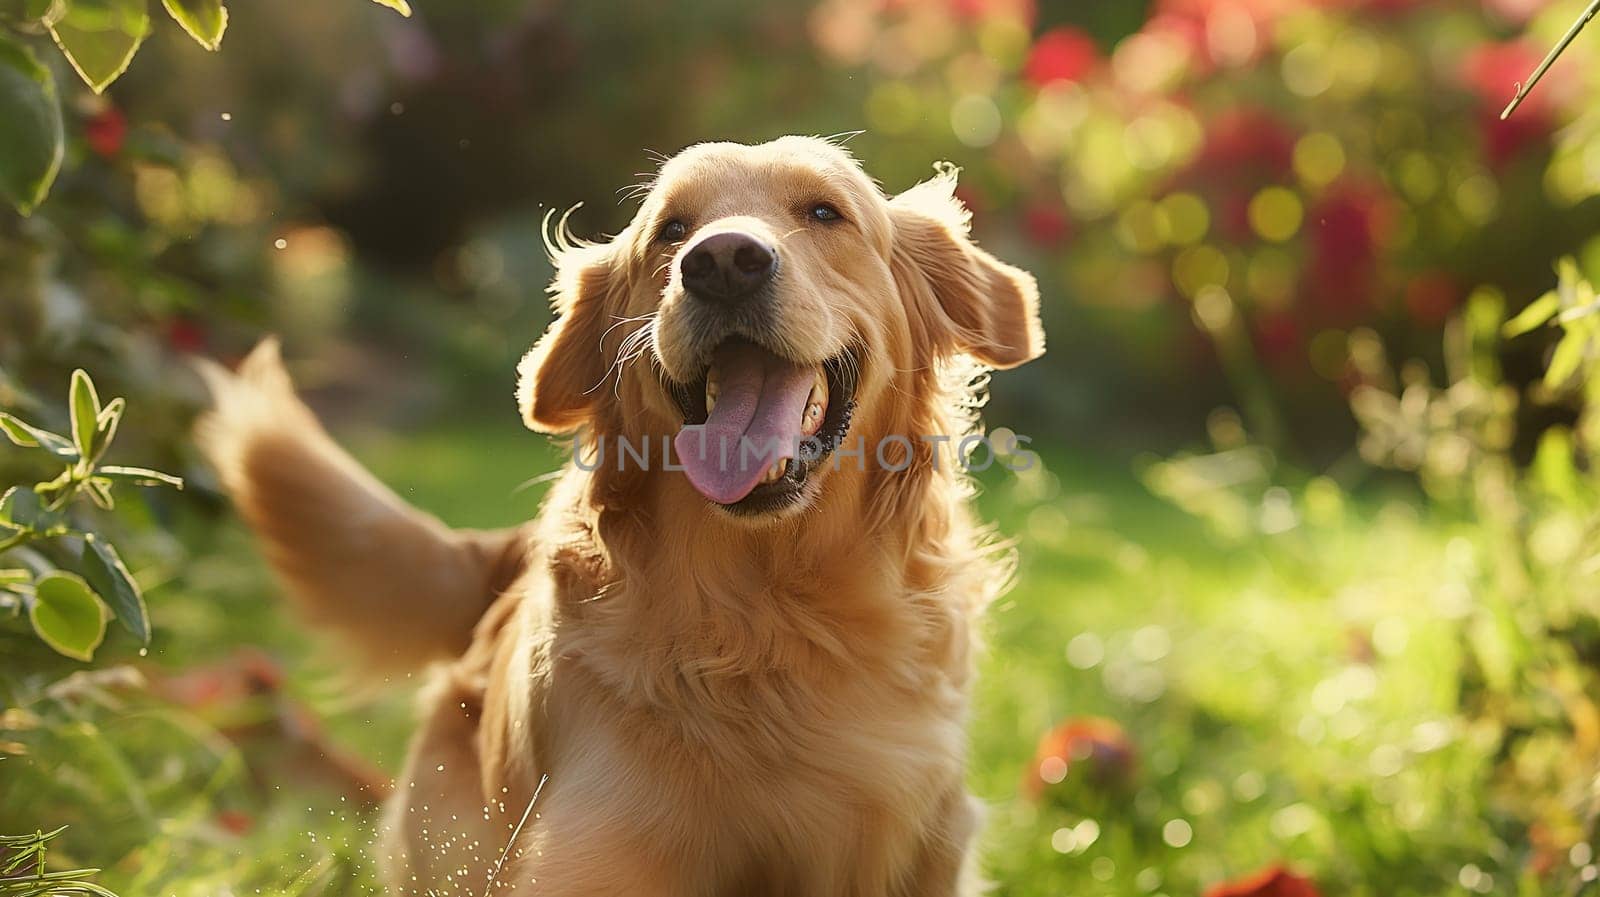 Happy golden retriever dog enjoying sunlight in the garden with green grass and outdoors scene